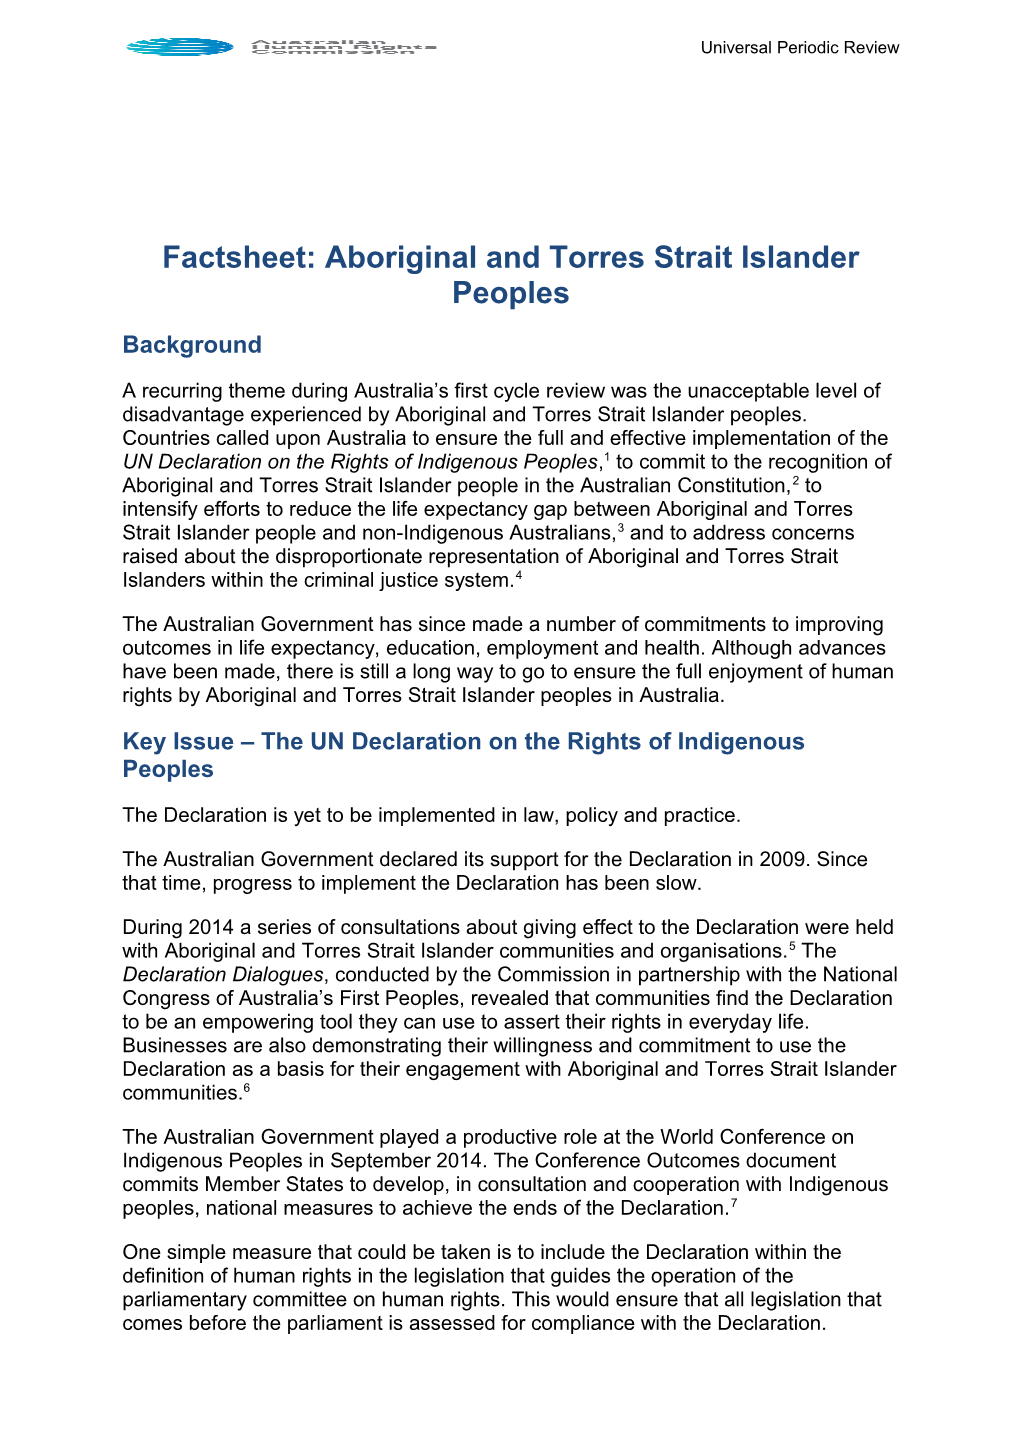 Factsheet: Aboriginal and Torres Strait Islander Peoples